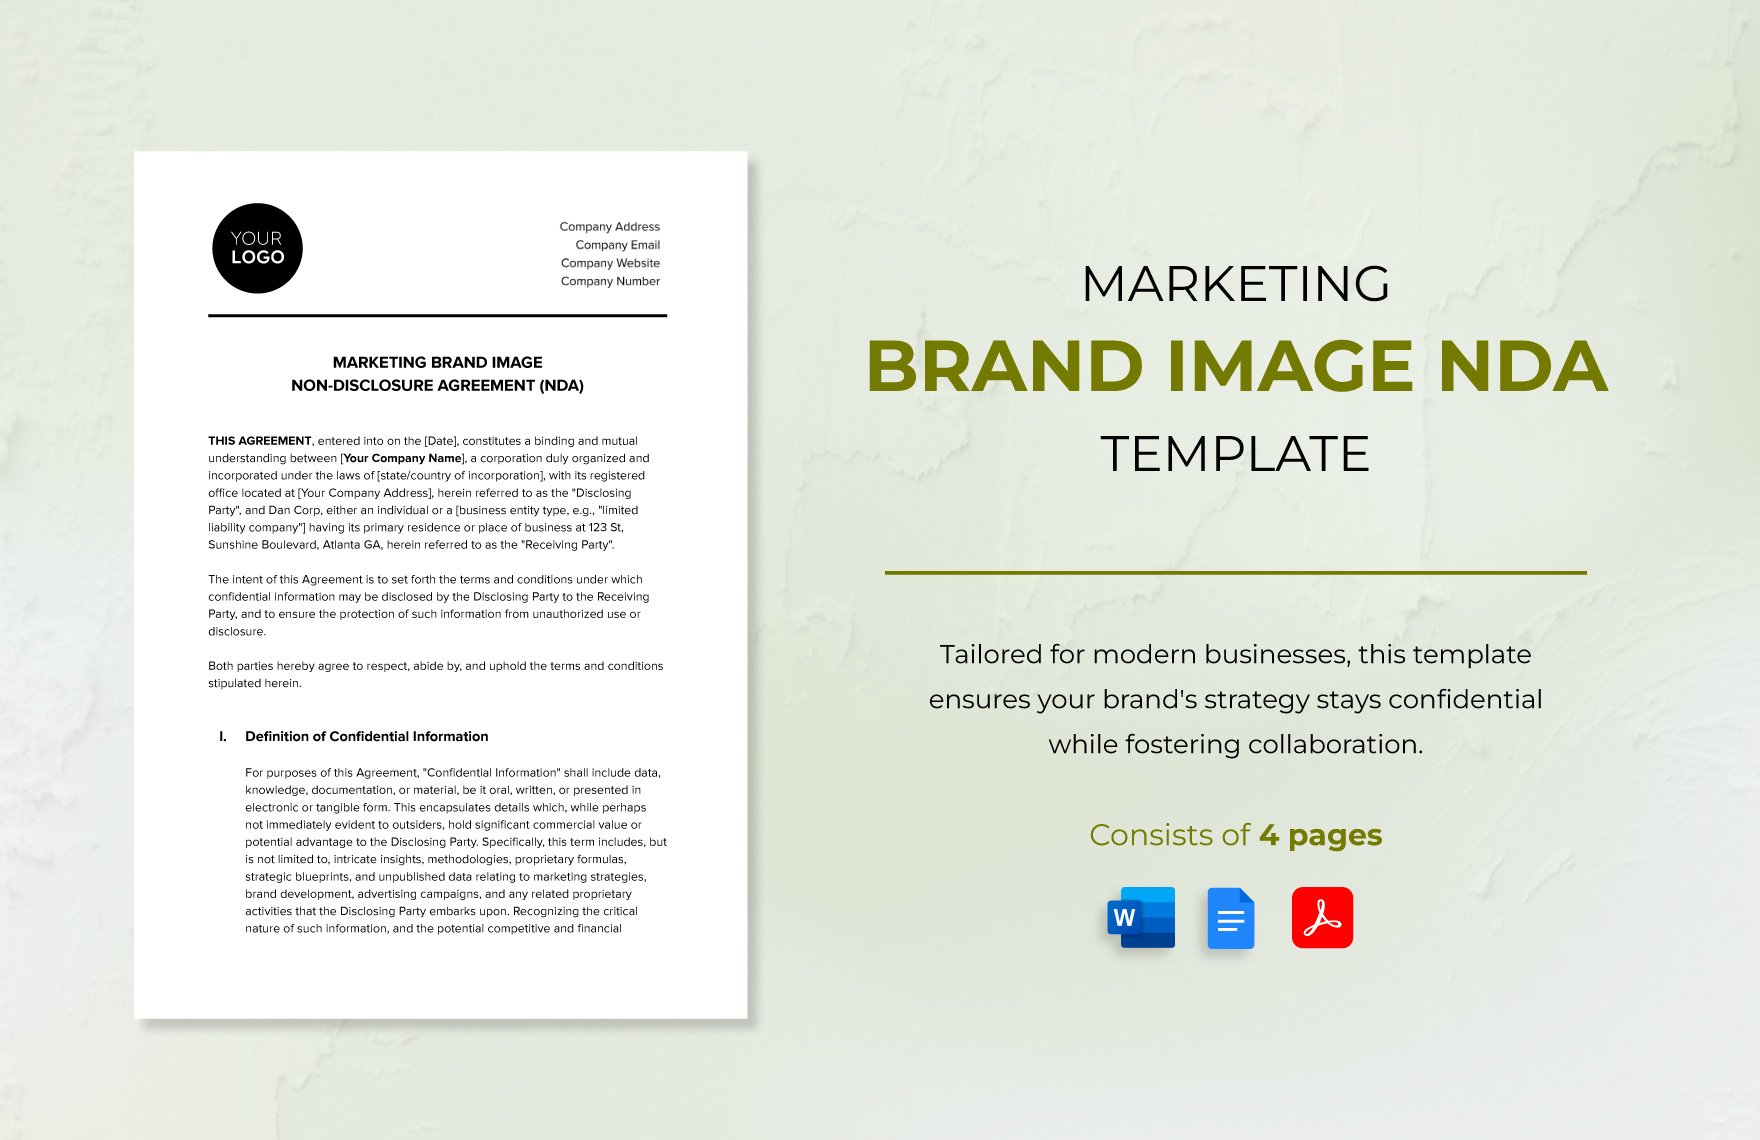 Marketing Brand Image NDA Template in Word, Google Docs, PDF